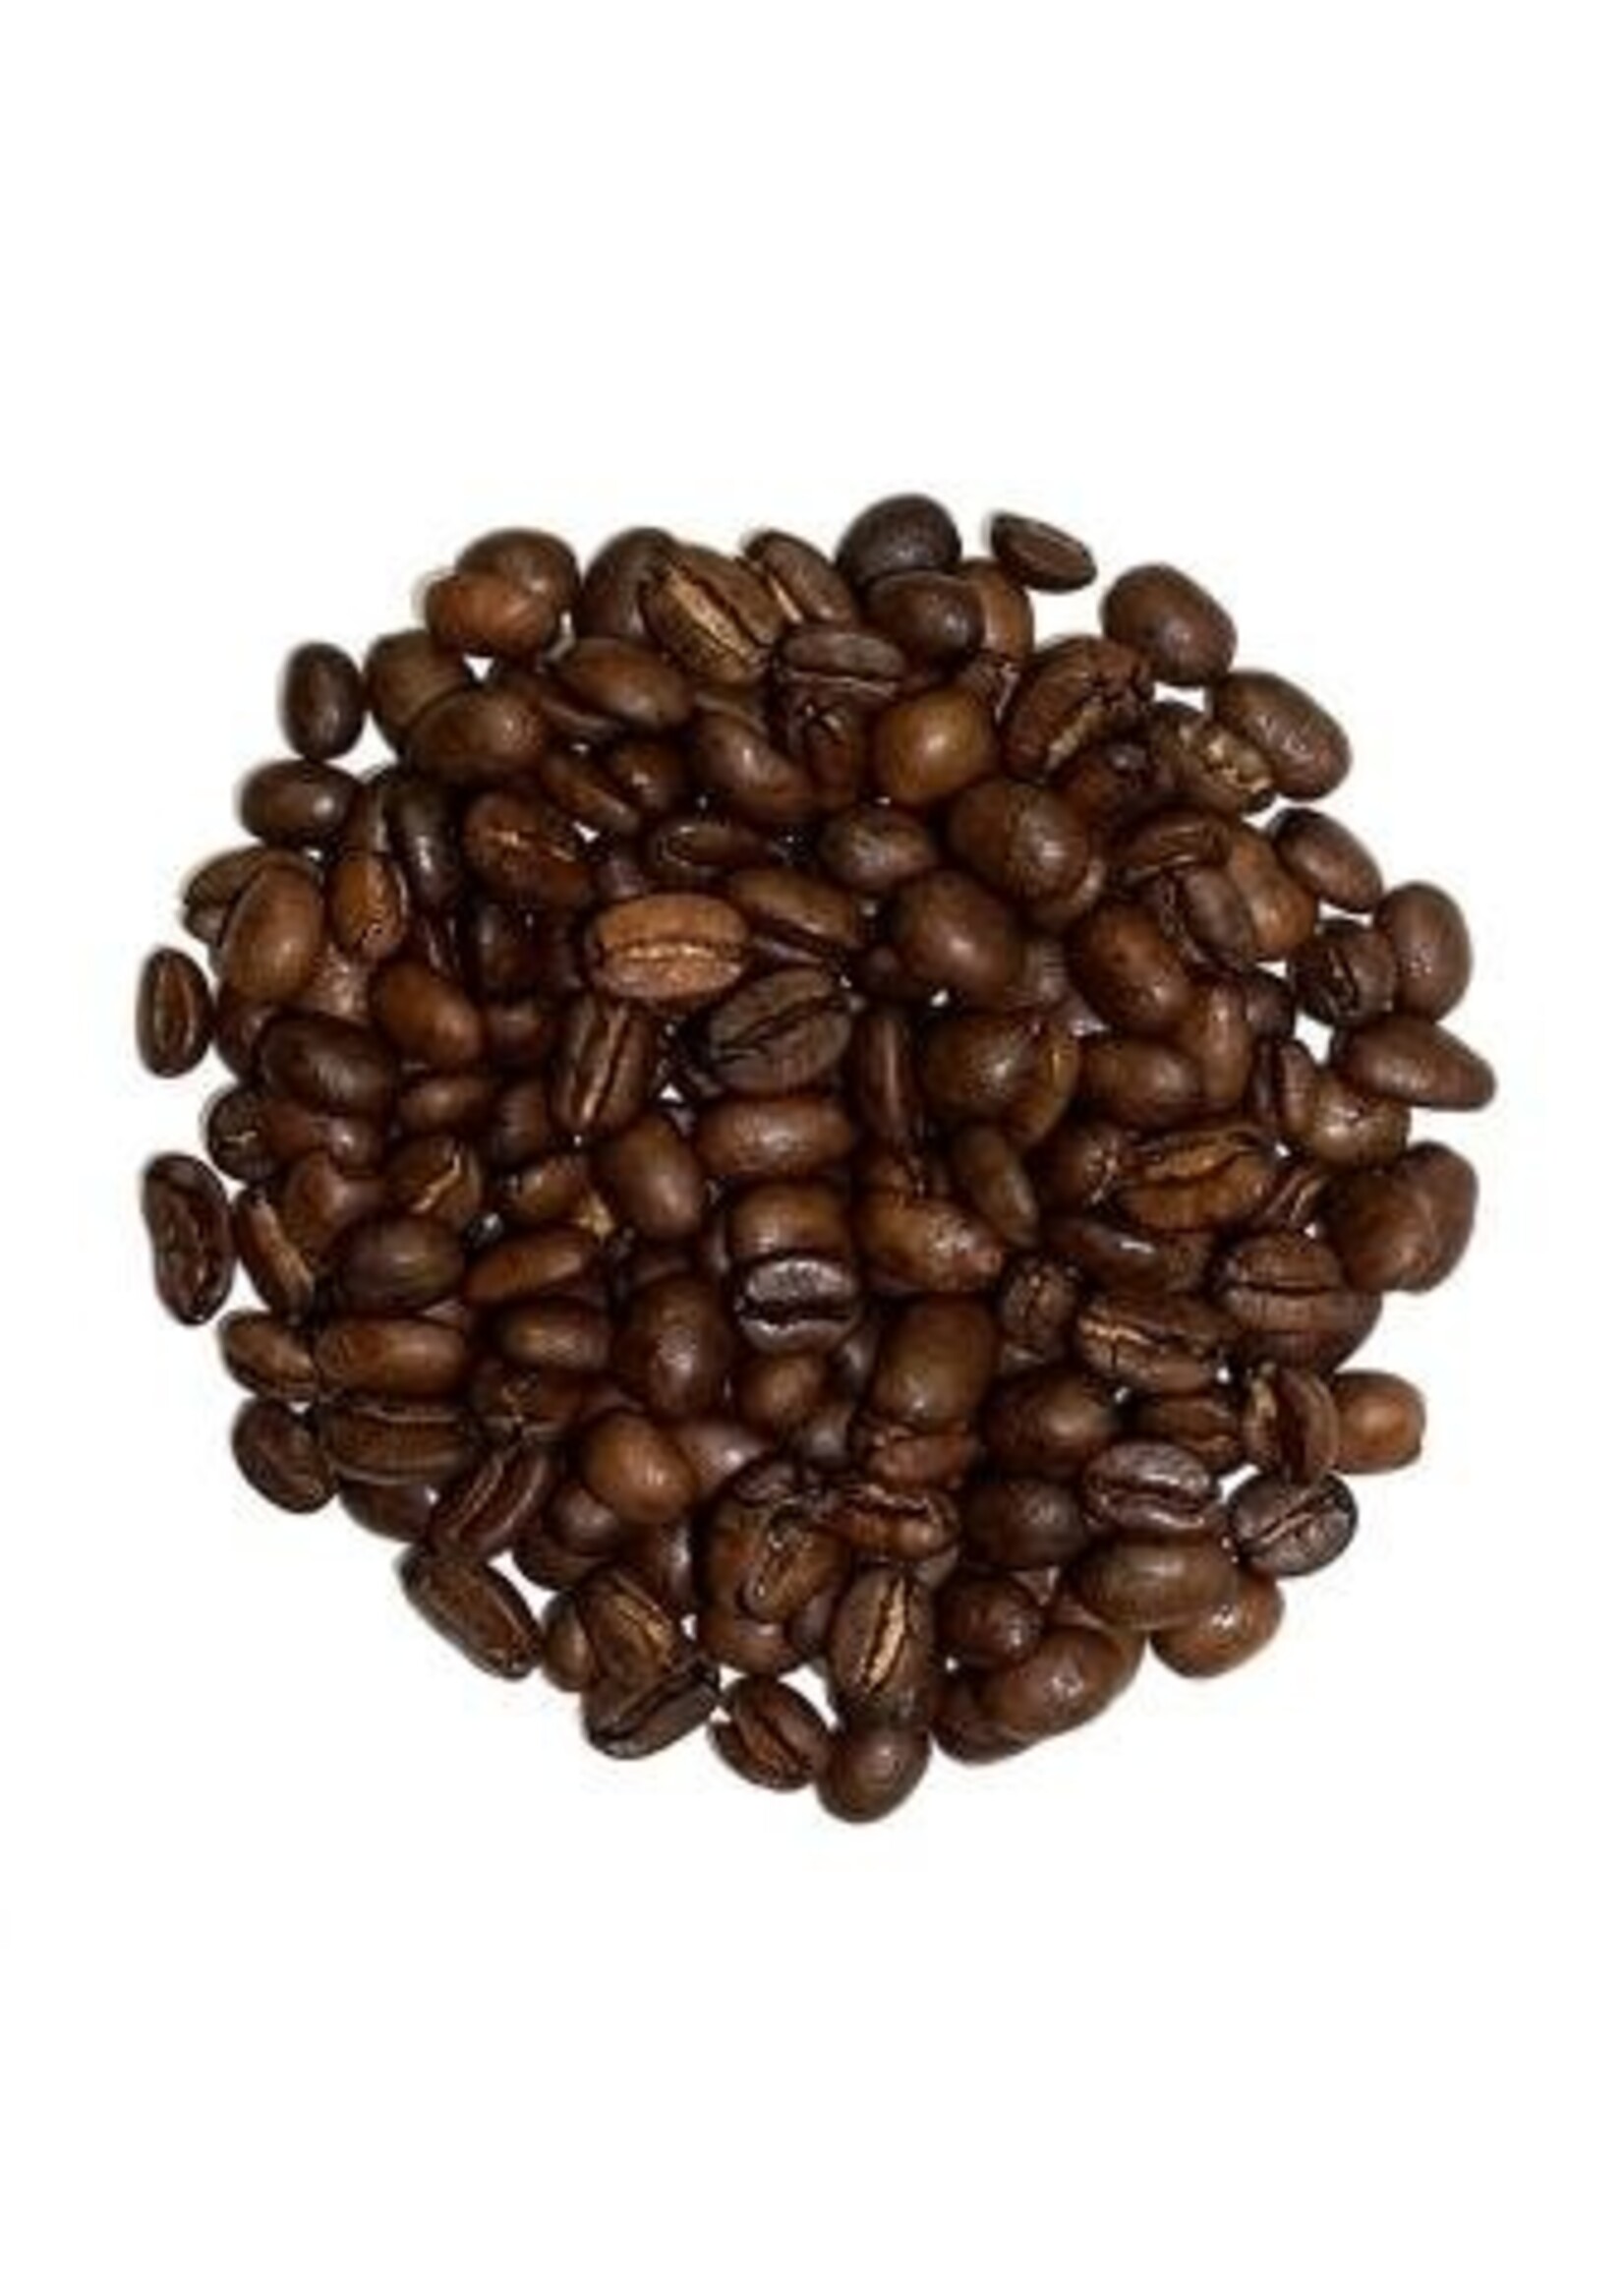 The best of nature - Koffie Verse koffiebonen uit Peru